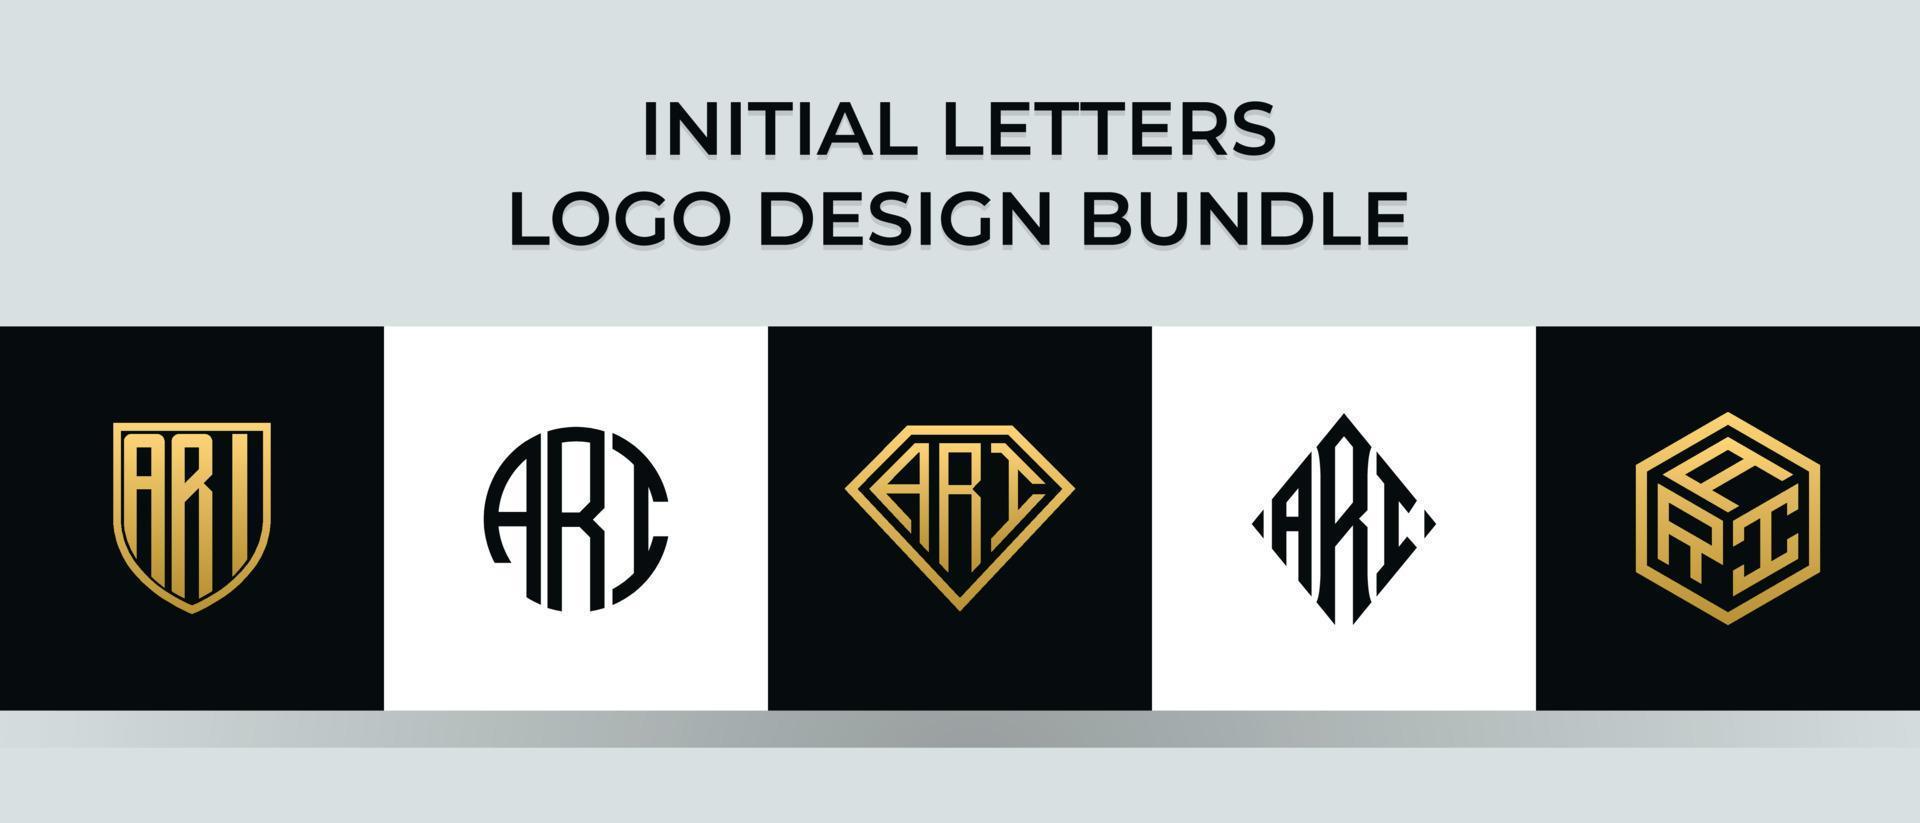 Anfangsbuchstaben ari Logo Designs Bundle vektor